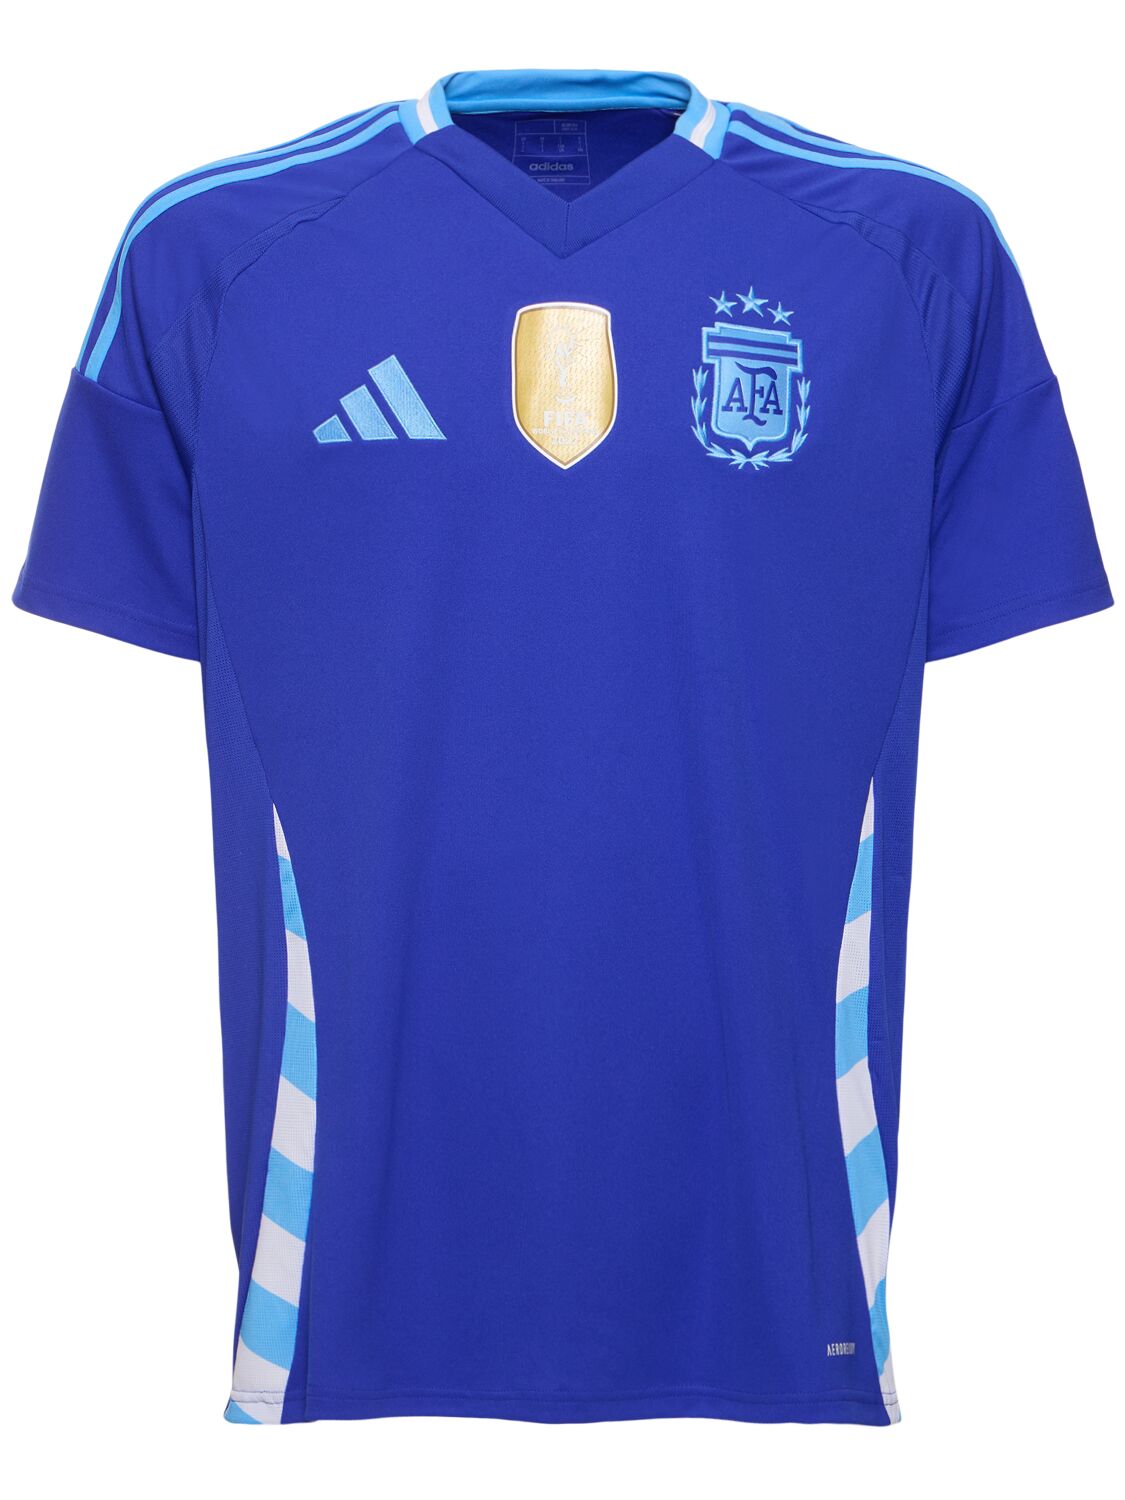 Adidas Originals Argentina Jersey In Blue